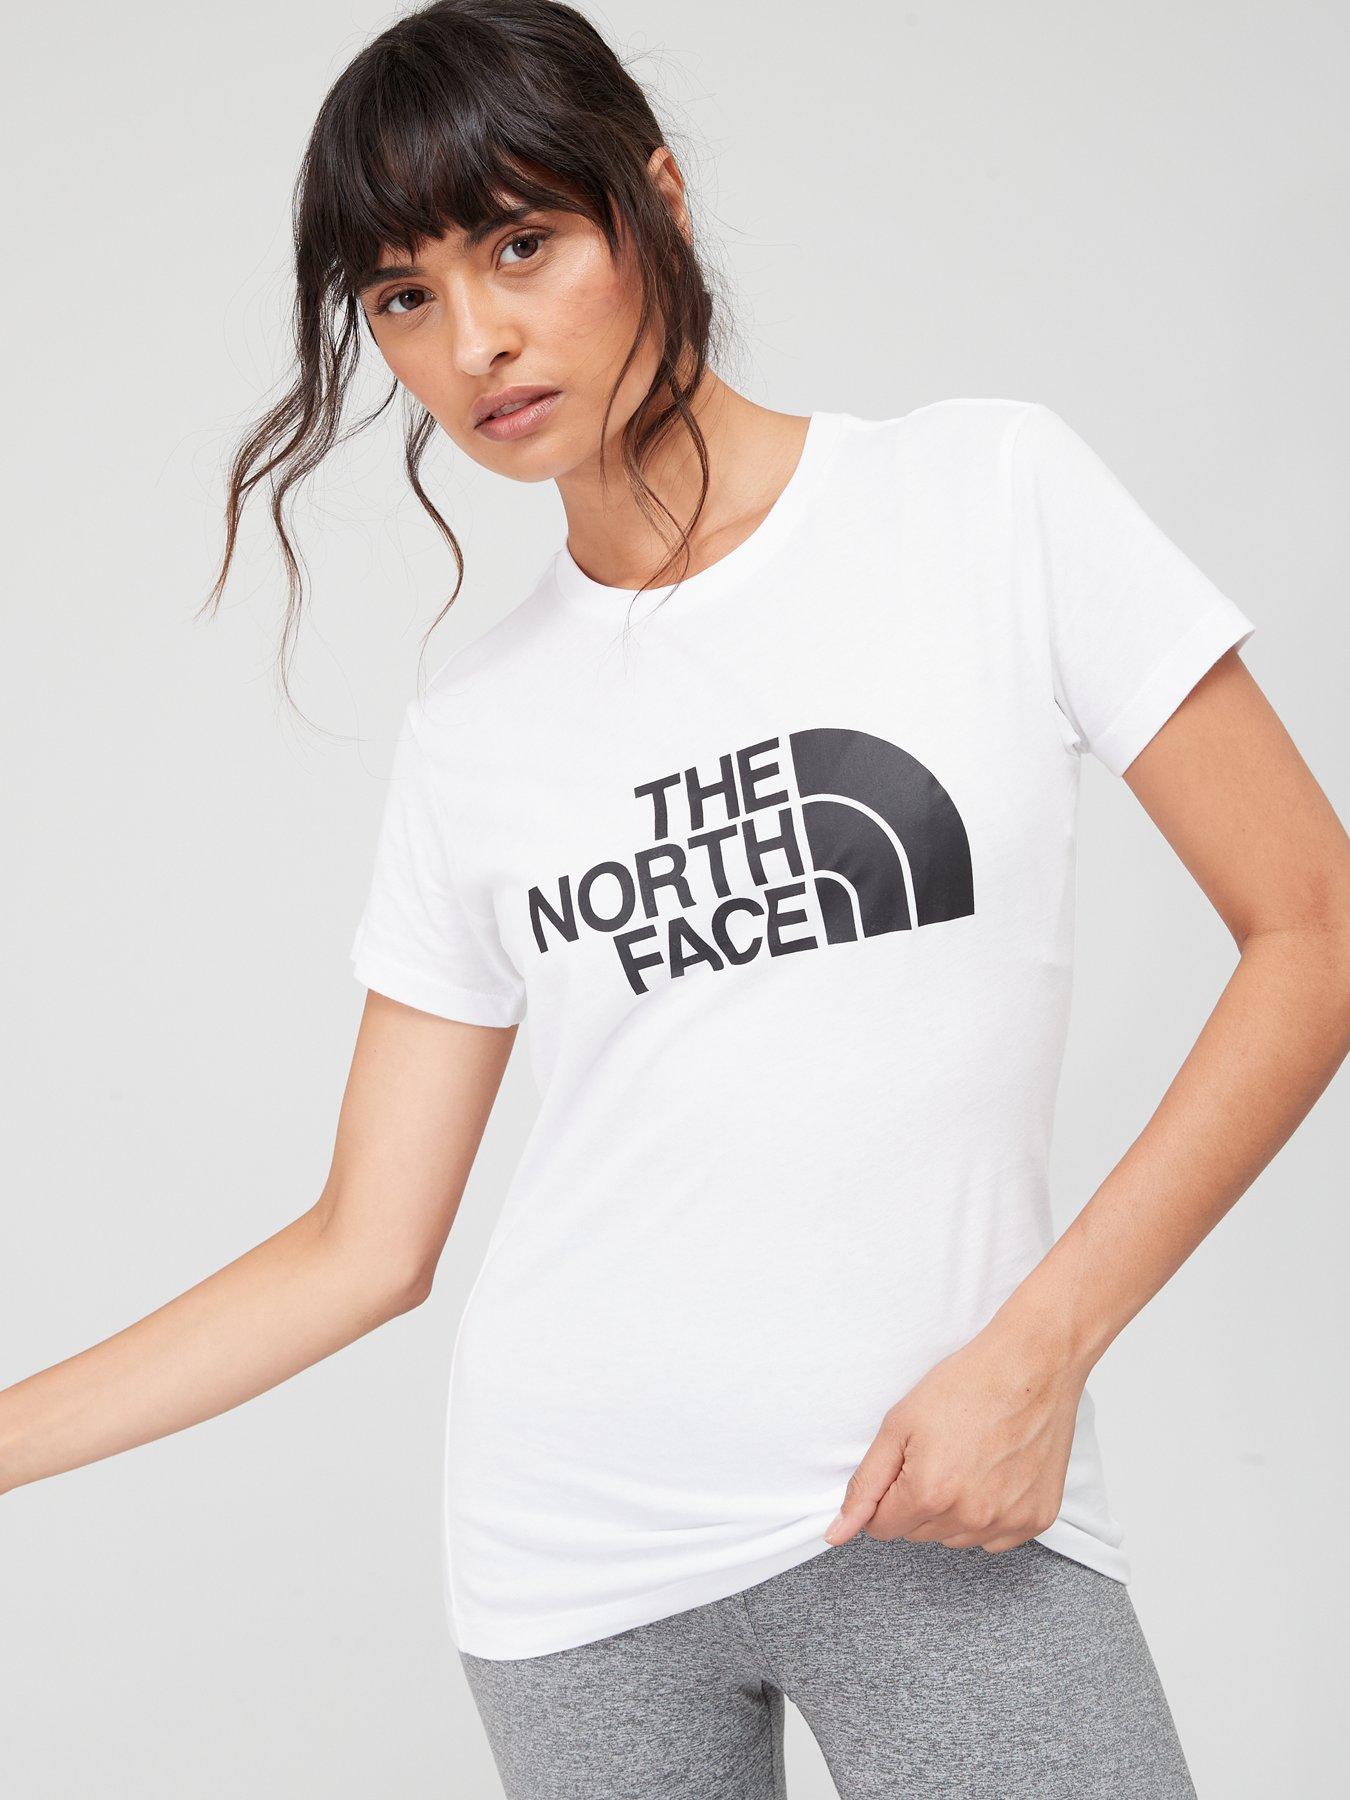 WOMEN FASHION Shirts & T-shirts NO STYLE discount 76% NoName T-shirt Black XXL 